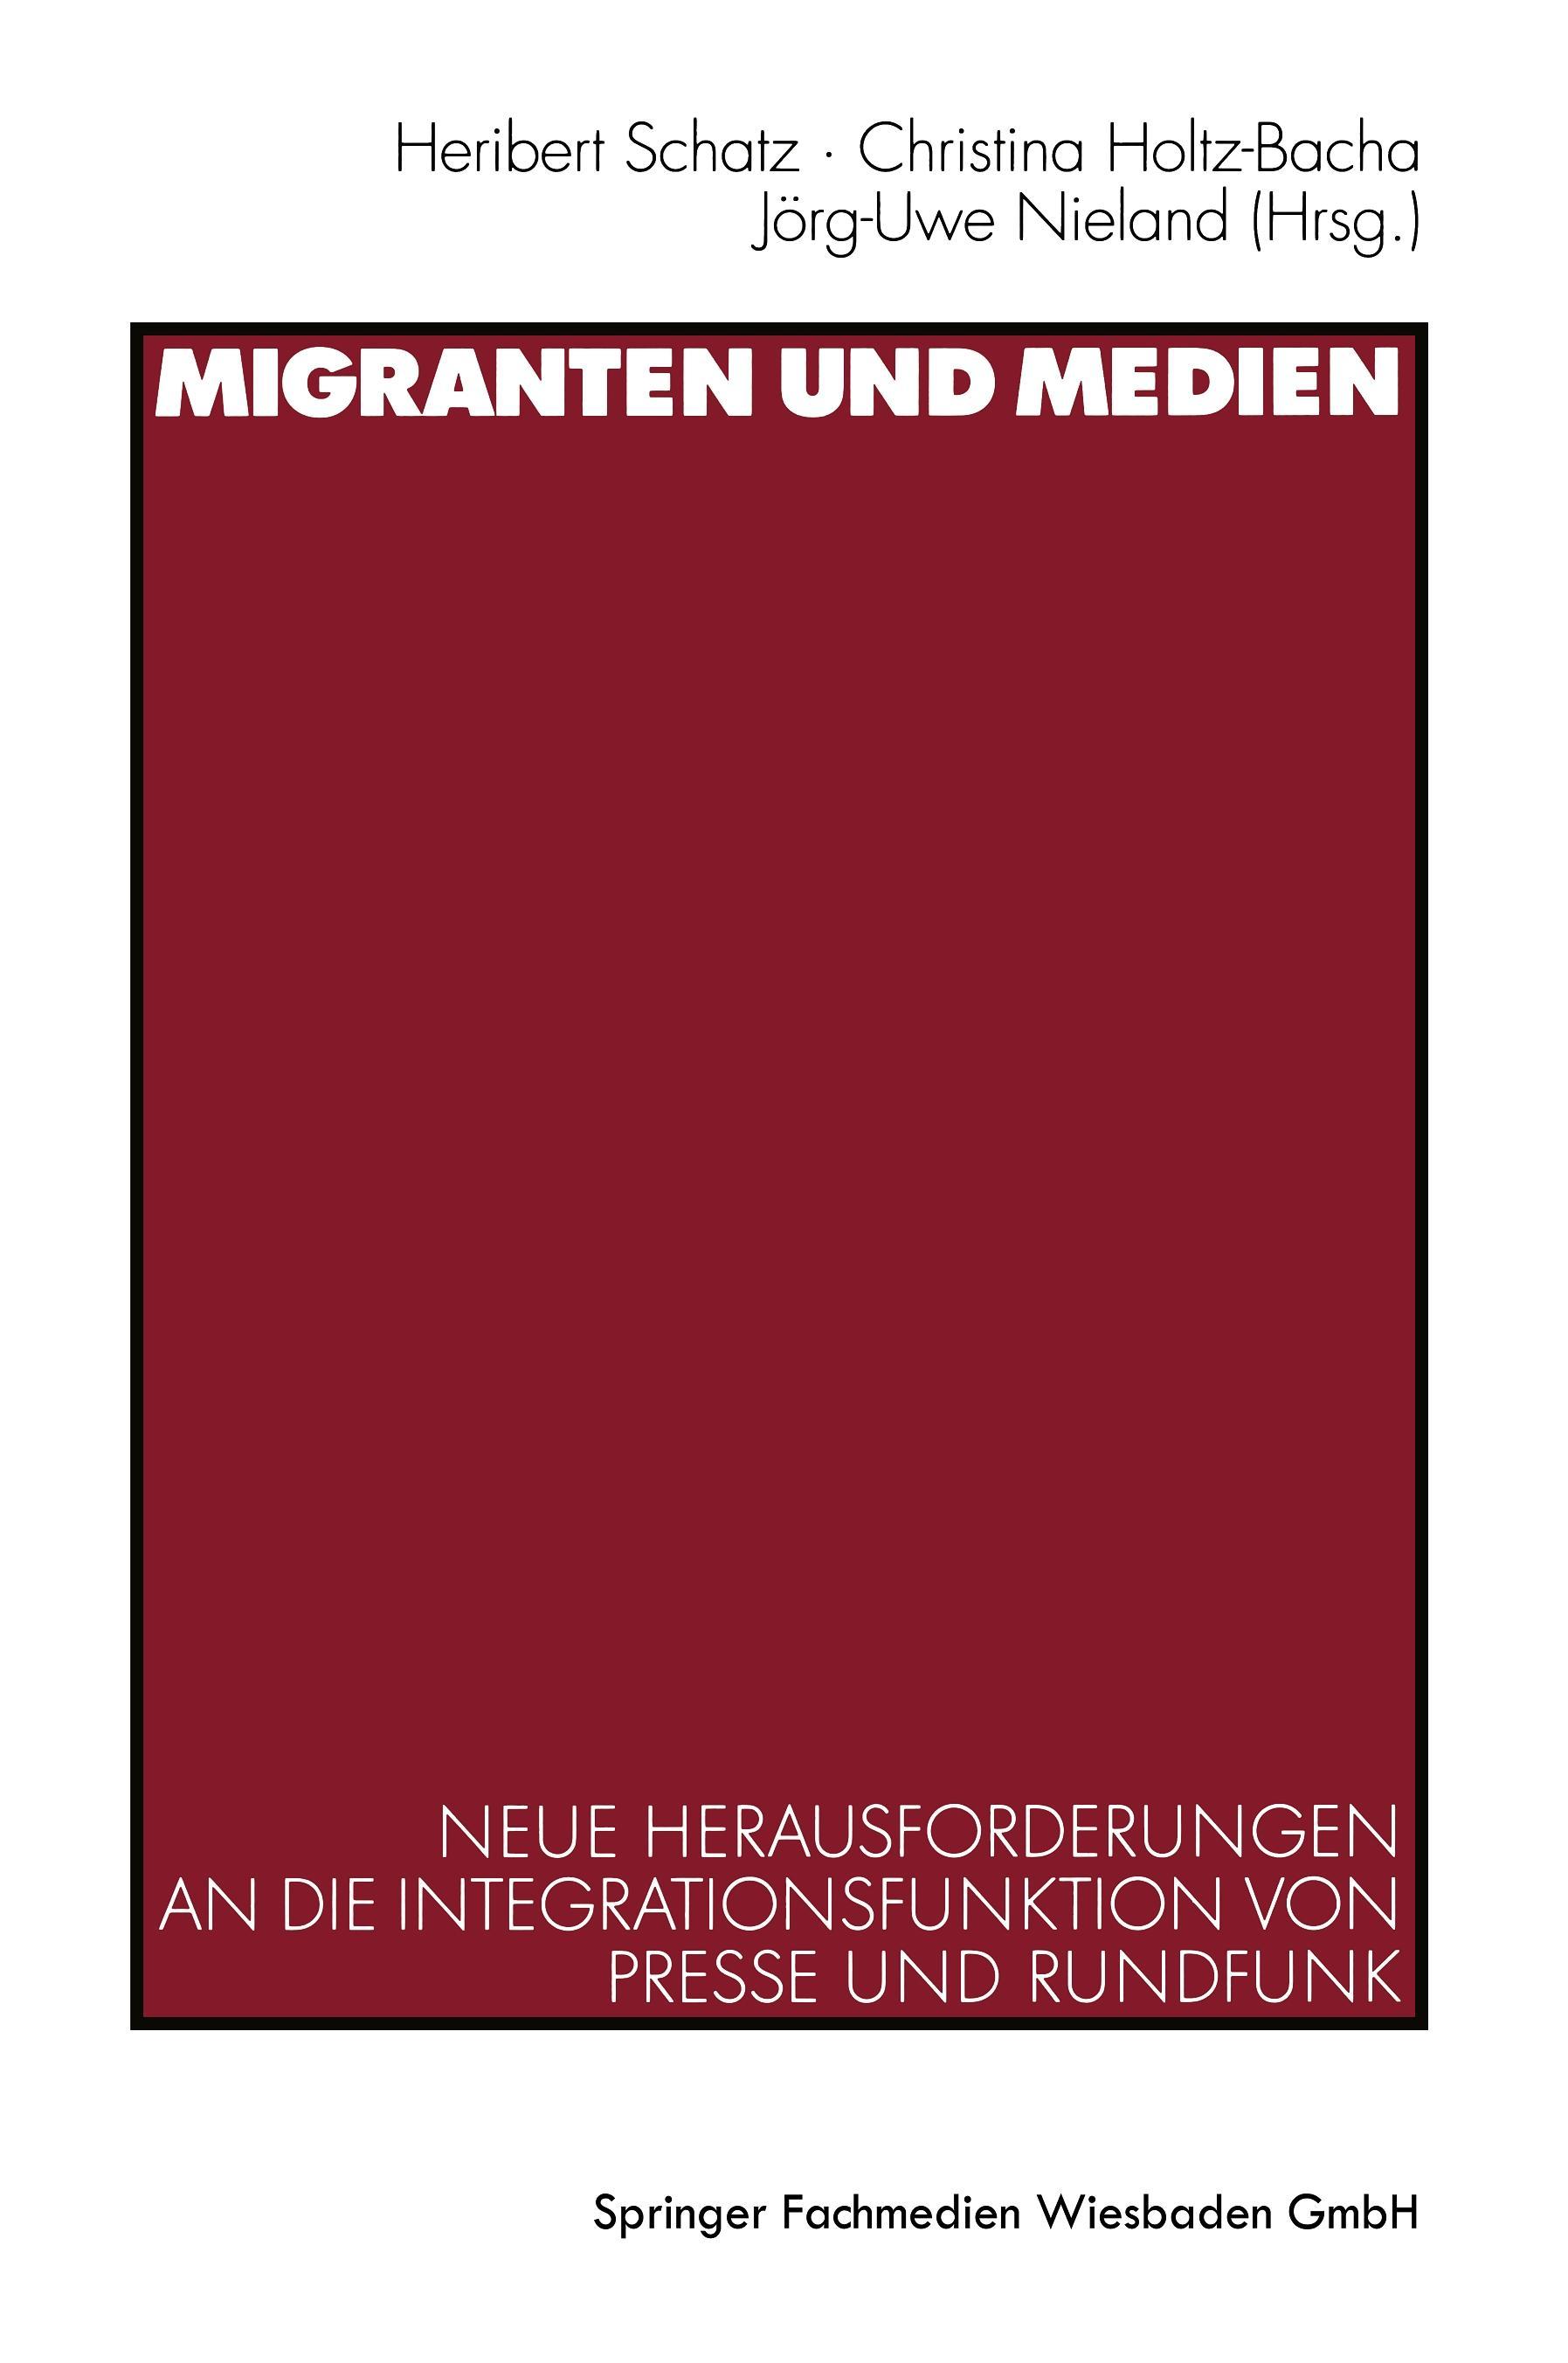 Migranten und Medien - Schatz, Heribert|Holtz-Bacha, Christina|Nieland, Jörg-Uwe